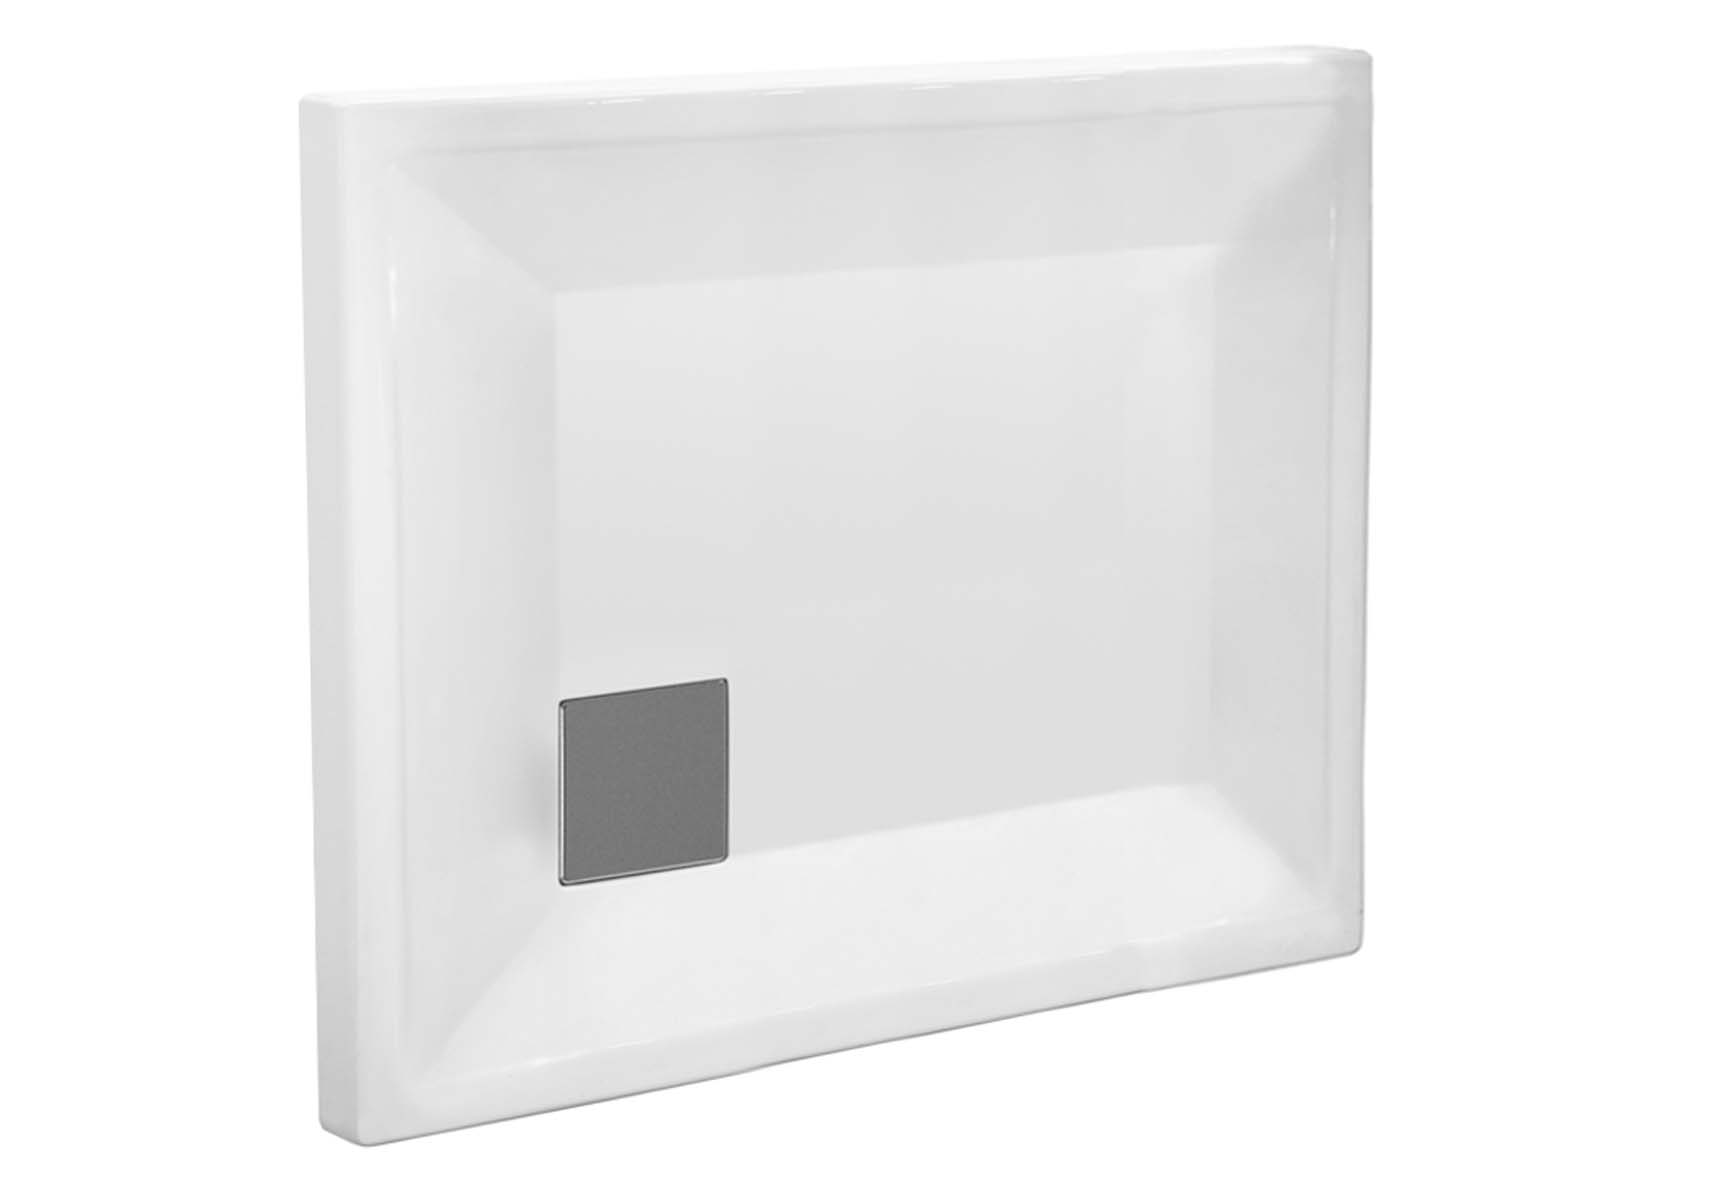 T75 90x75 Square Monoflat Shower Tray